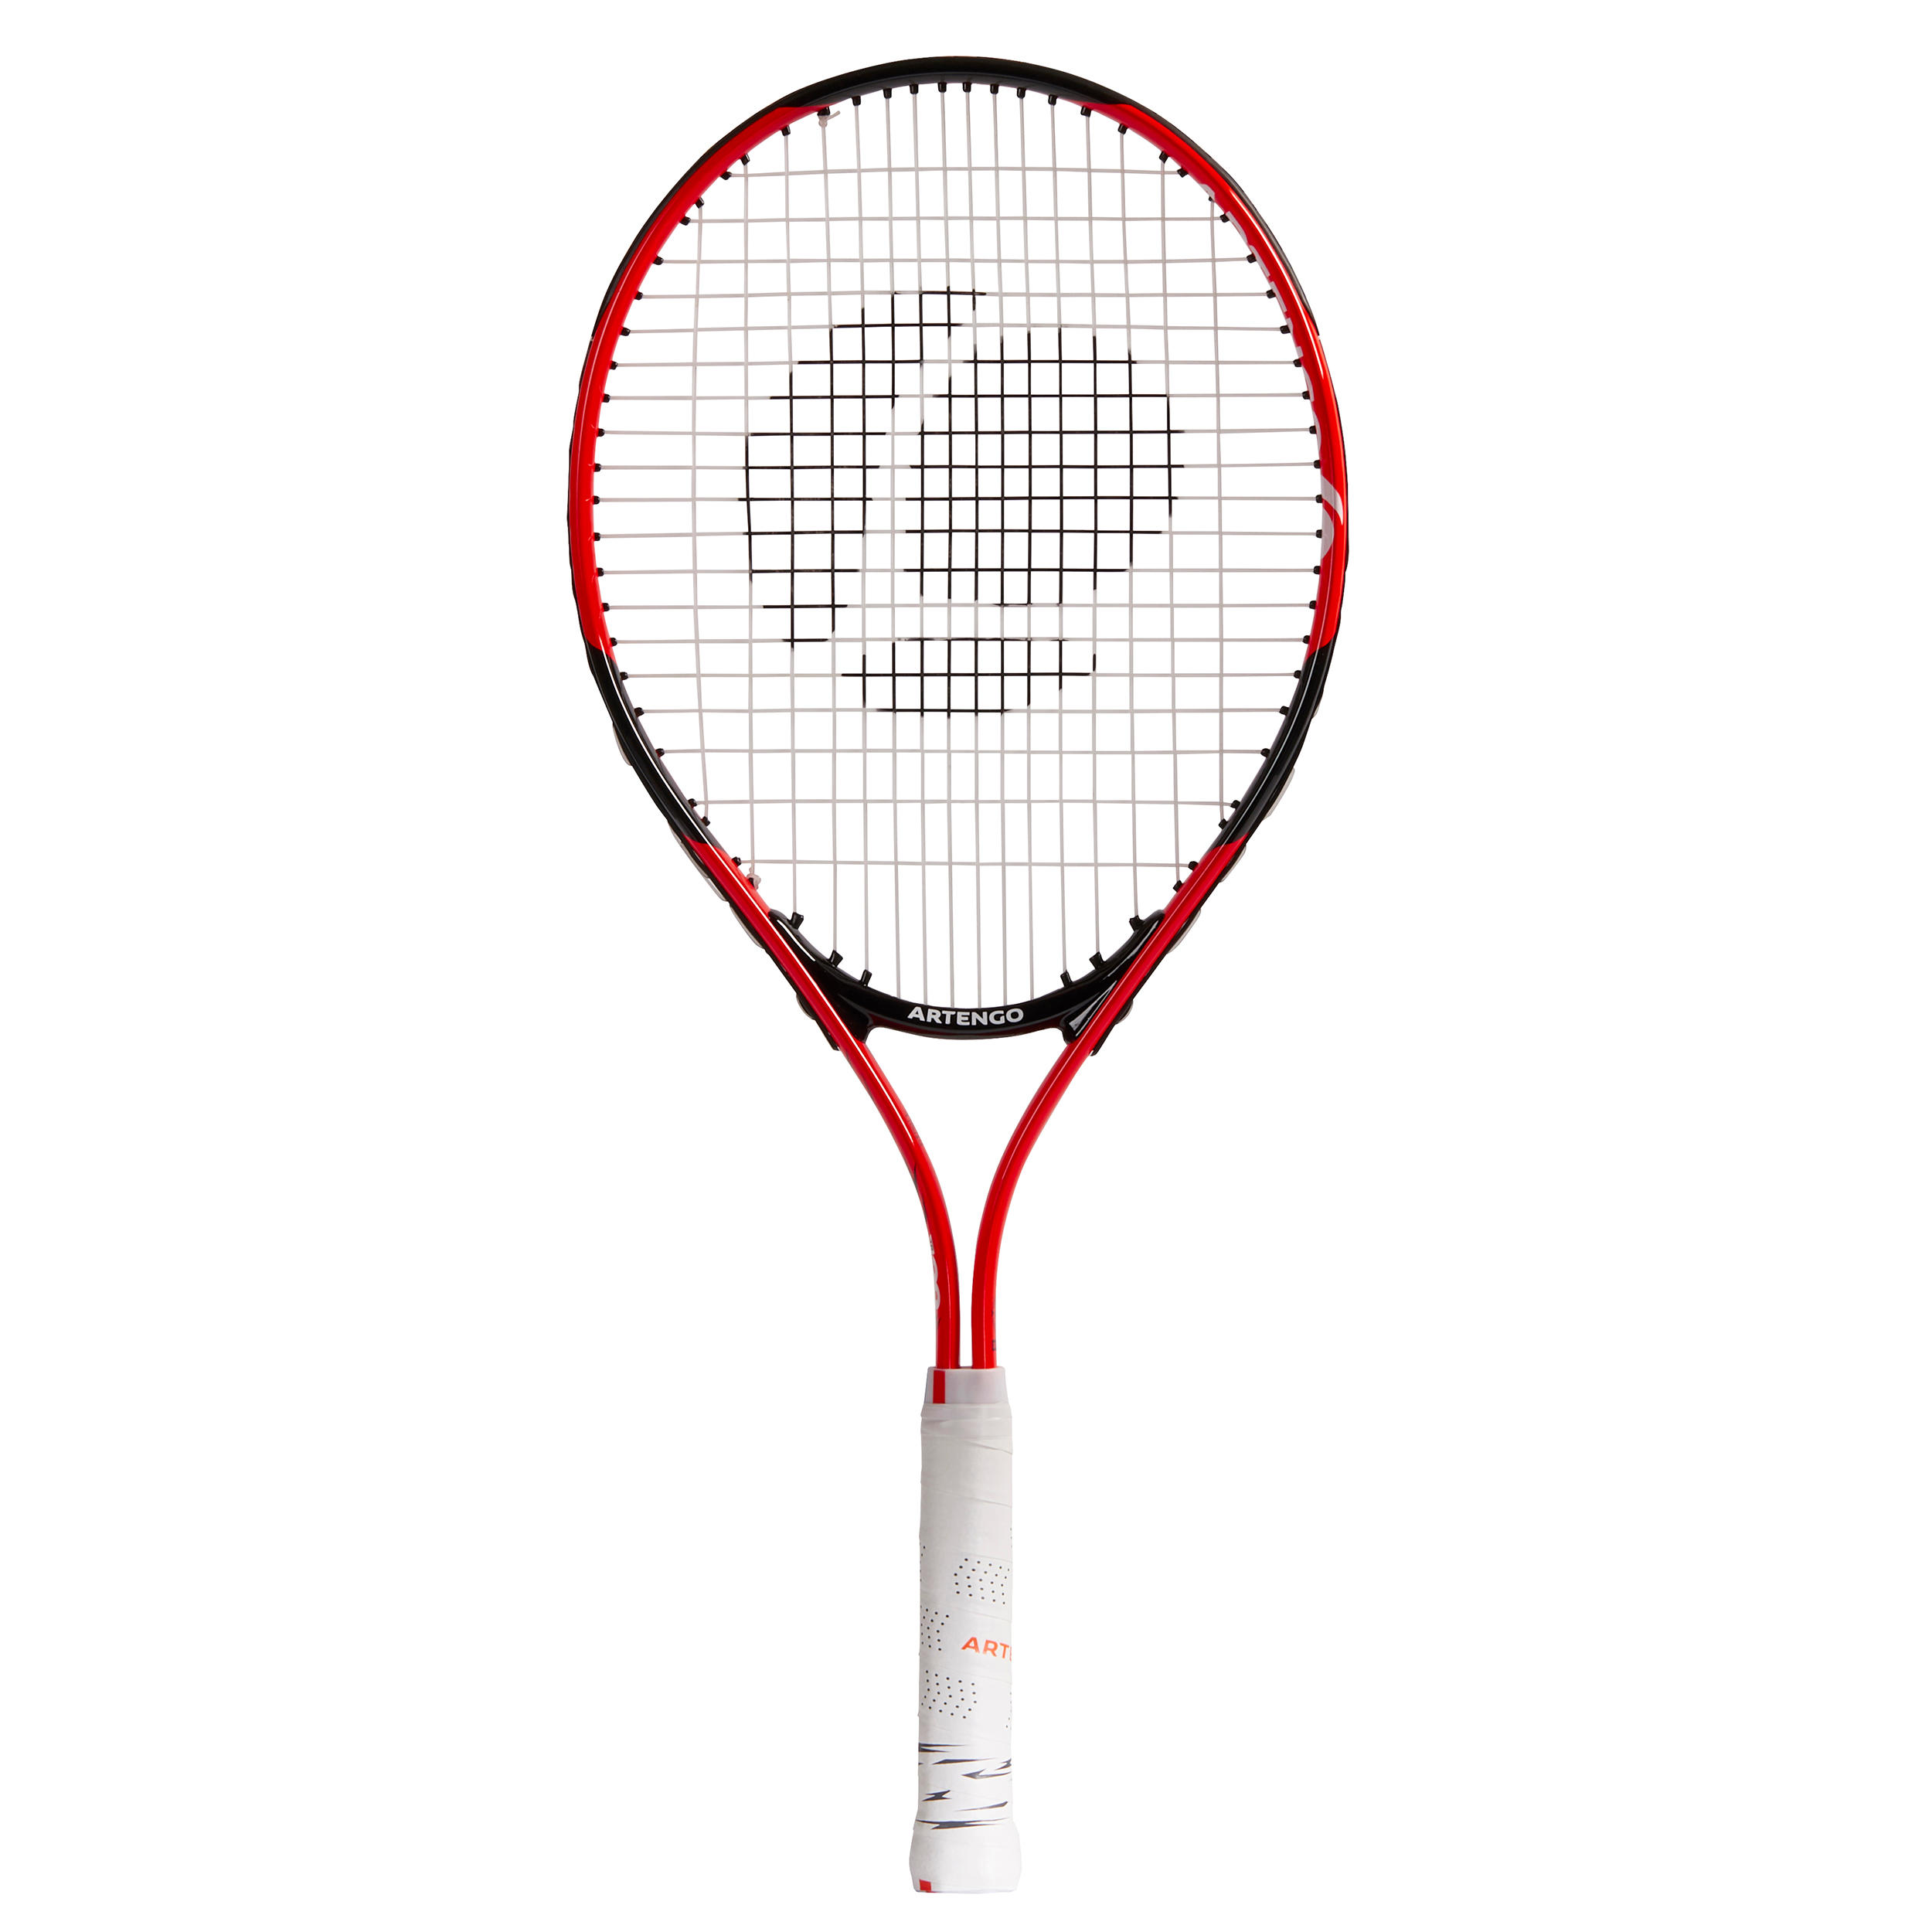 decathlon lawn tennis racket